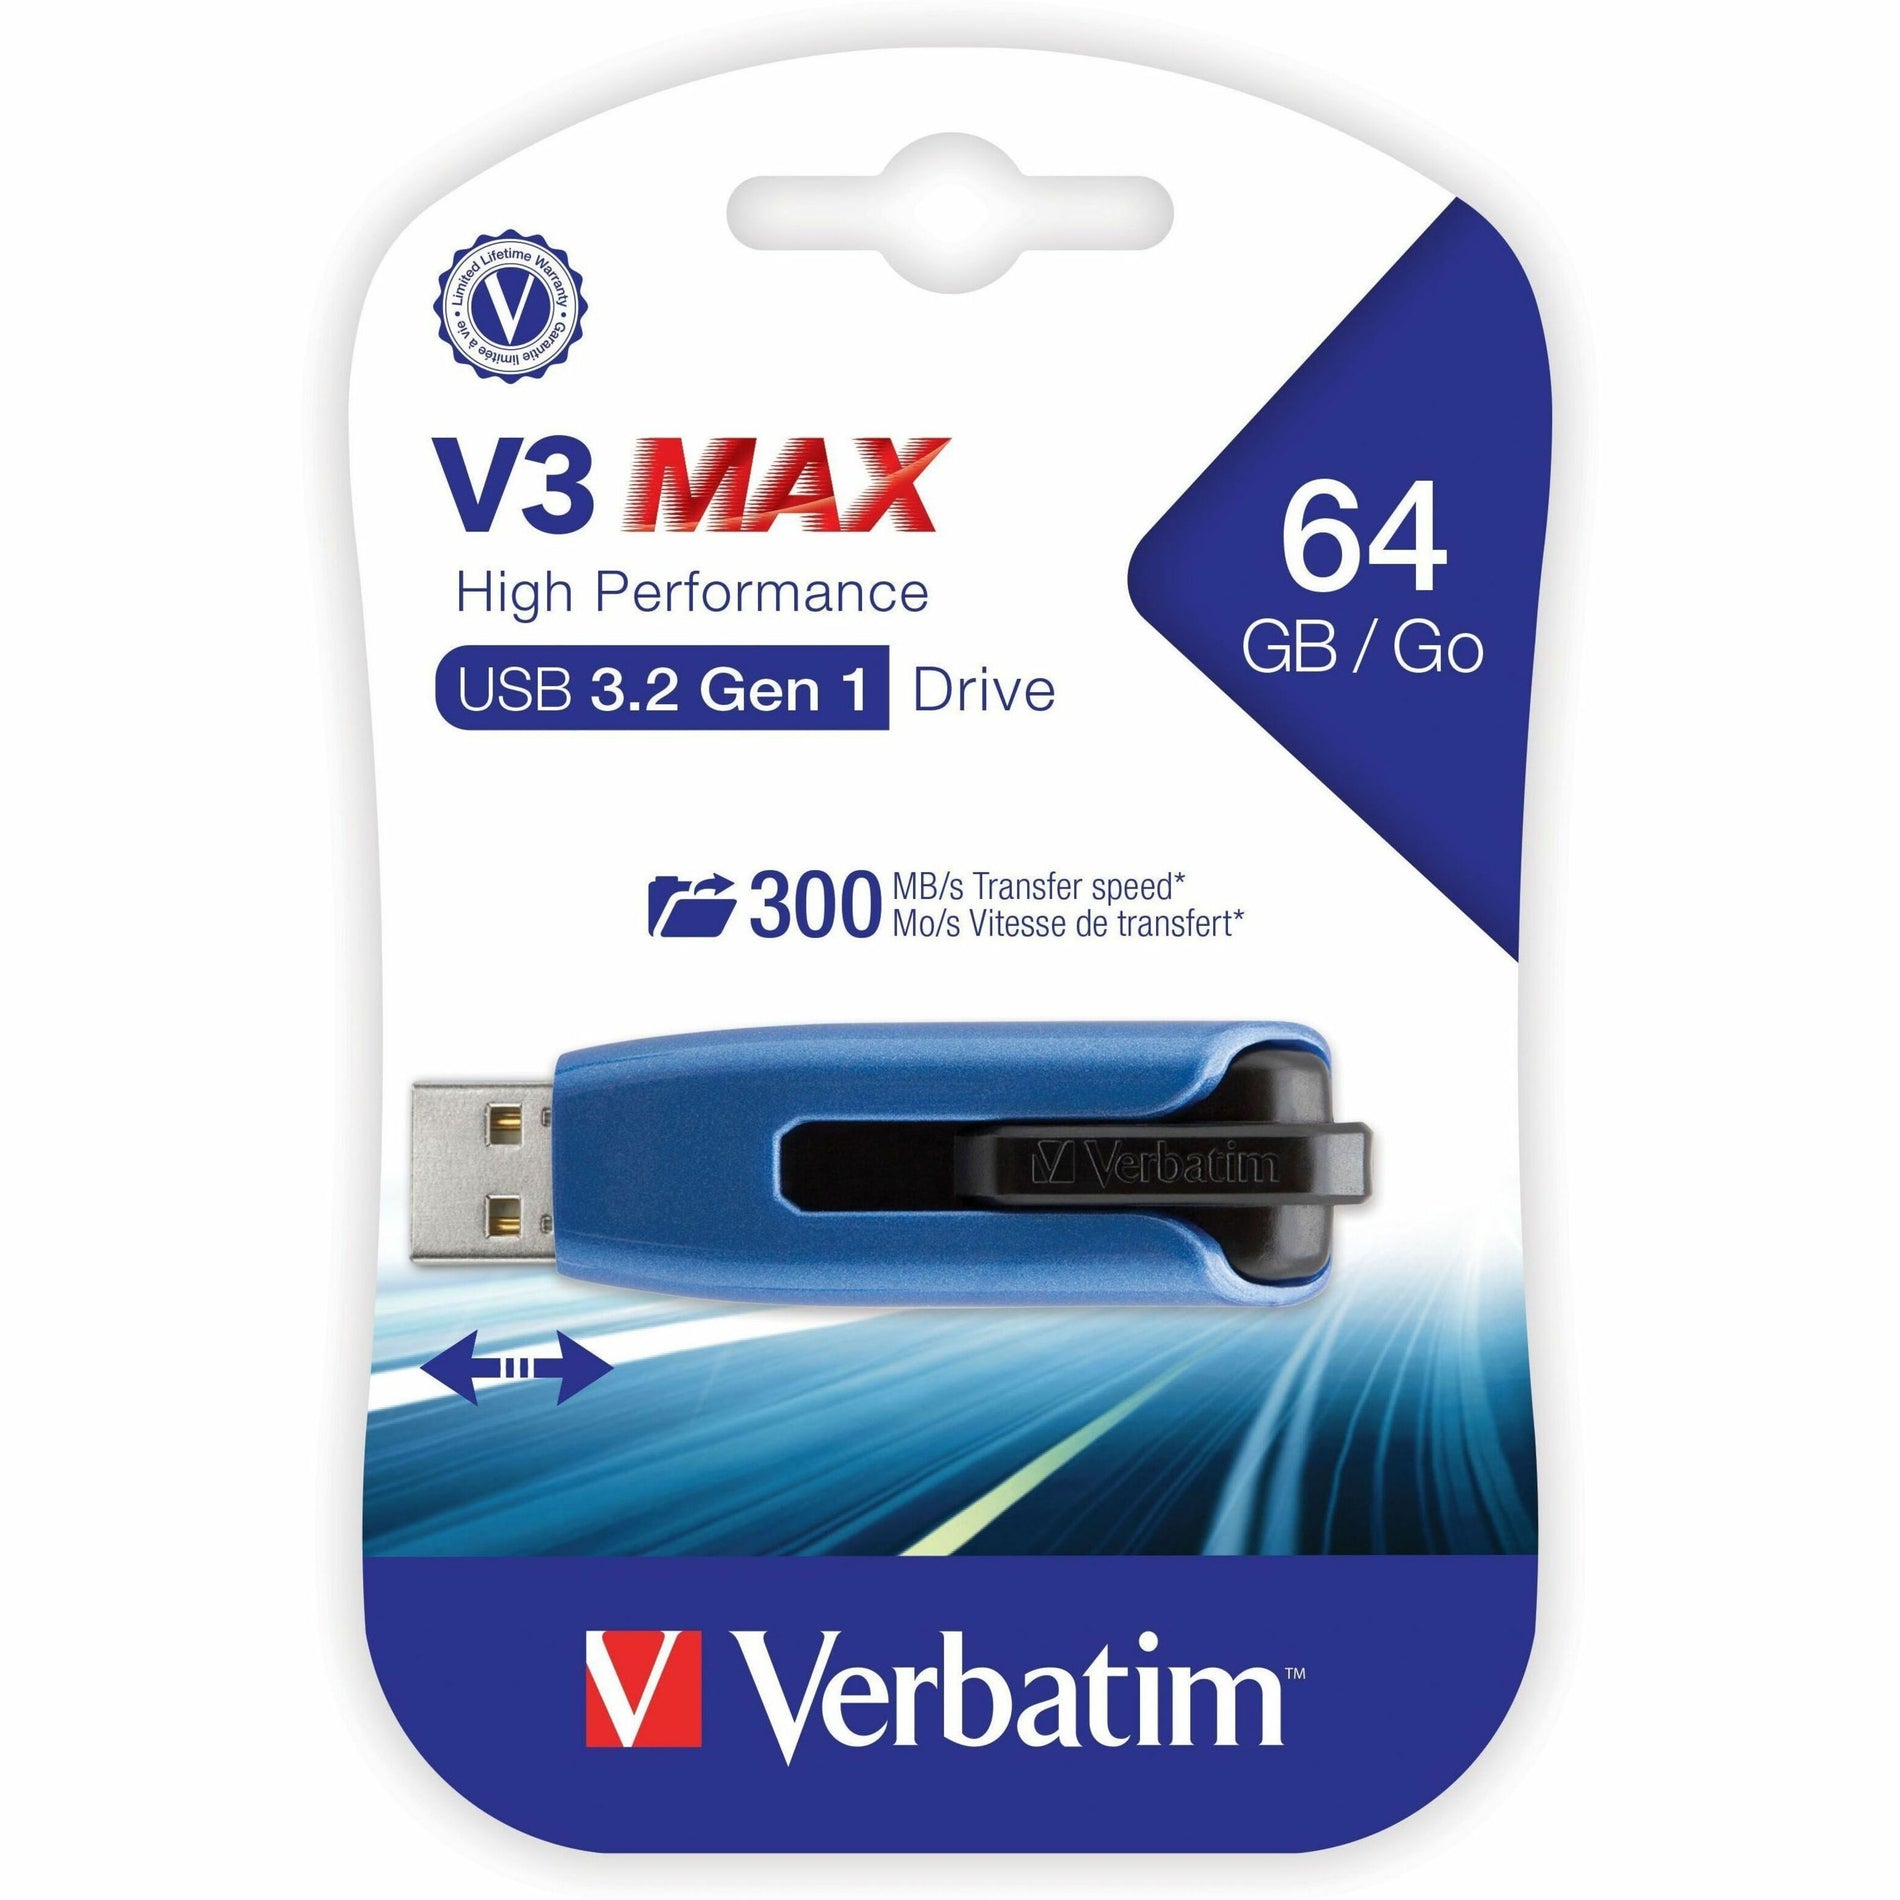 Verbatim 49807 Store 'n' Go V3 Max USB 3.0 Flash Drive - Blue, 64GB Storage